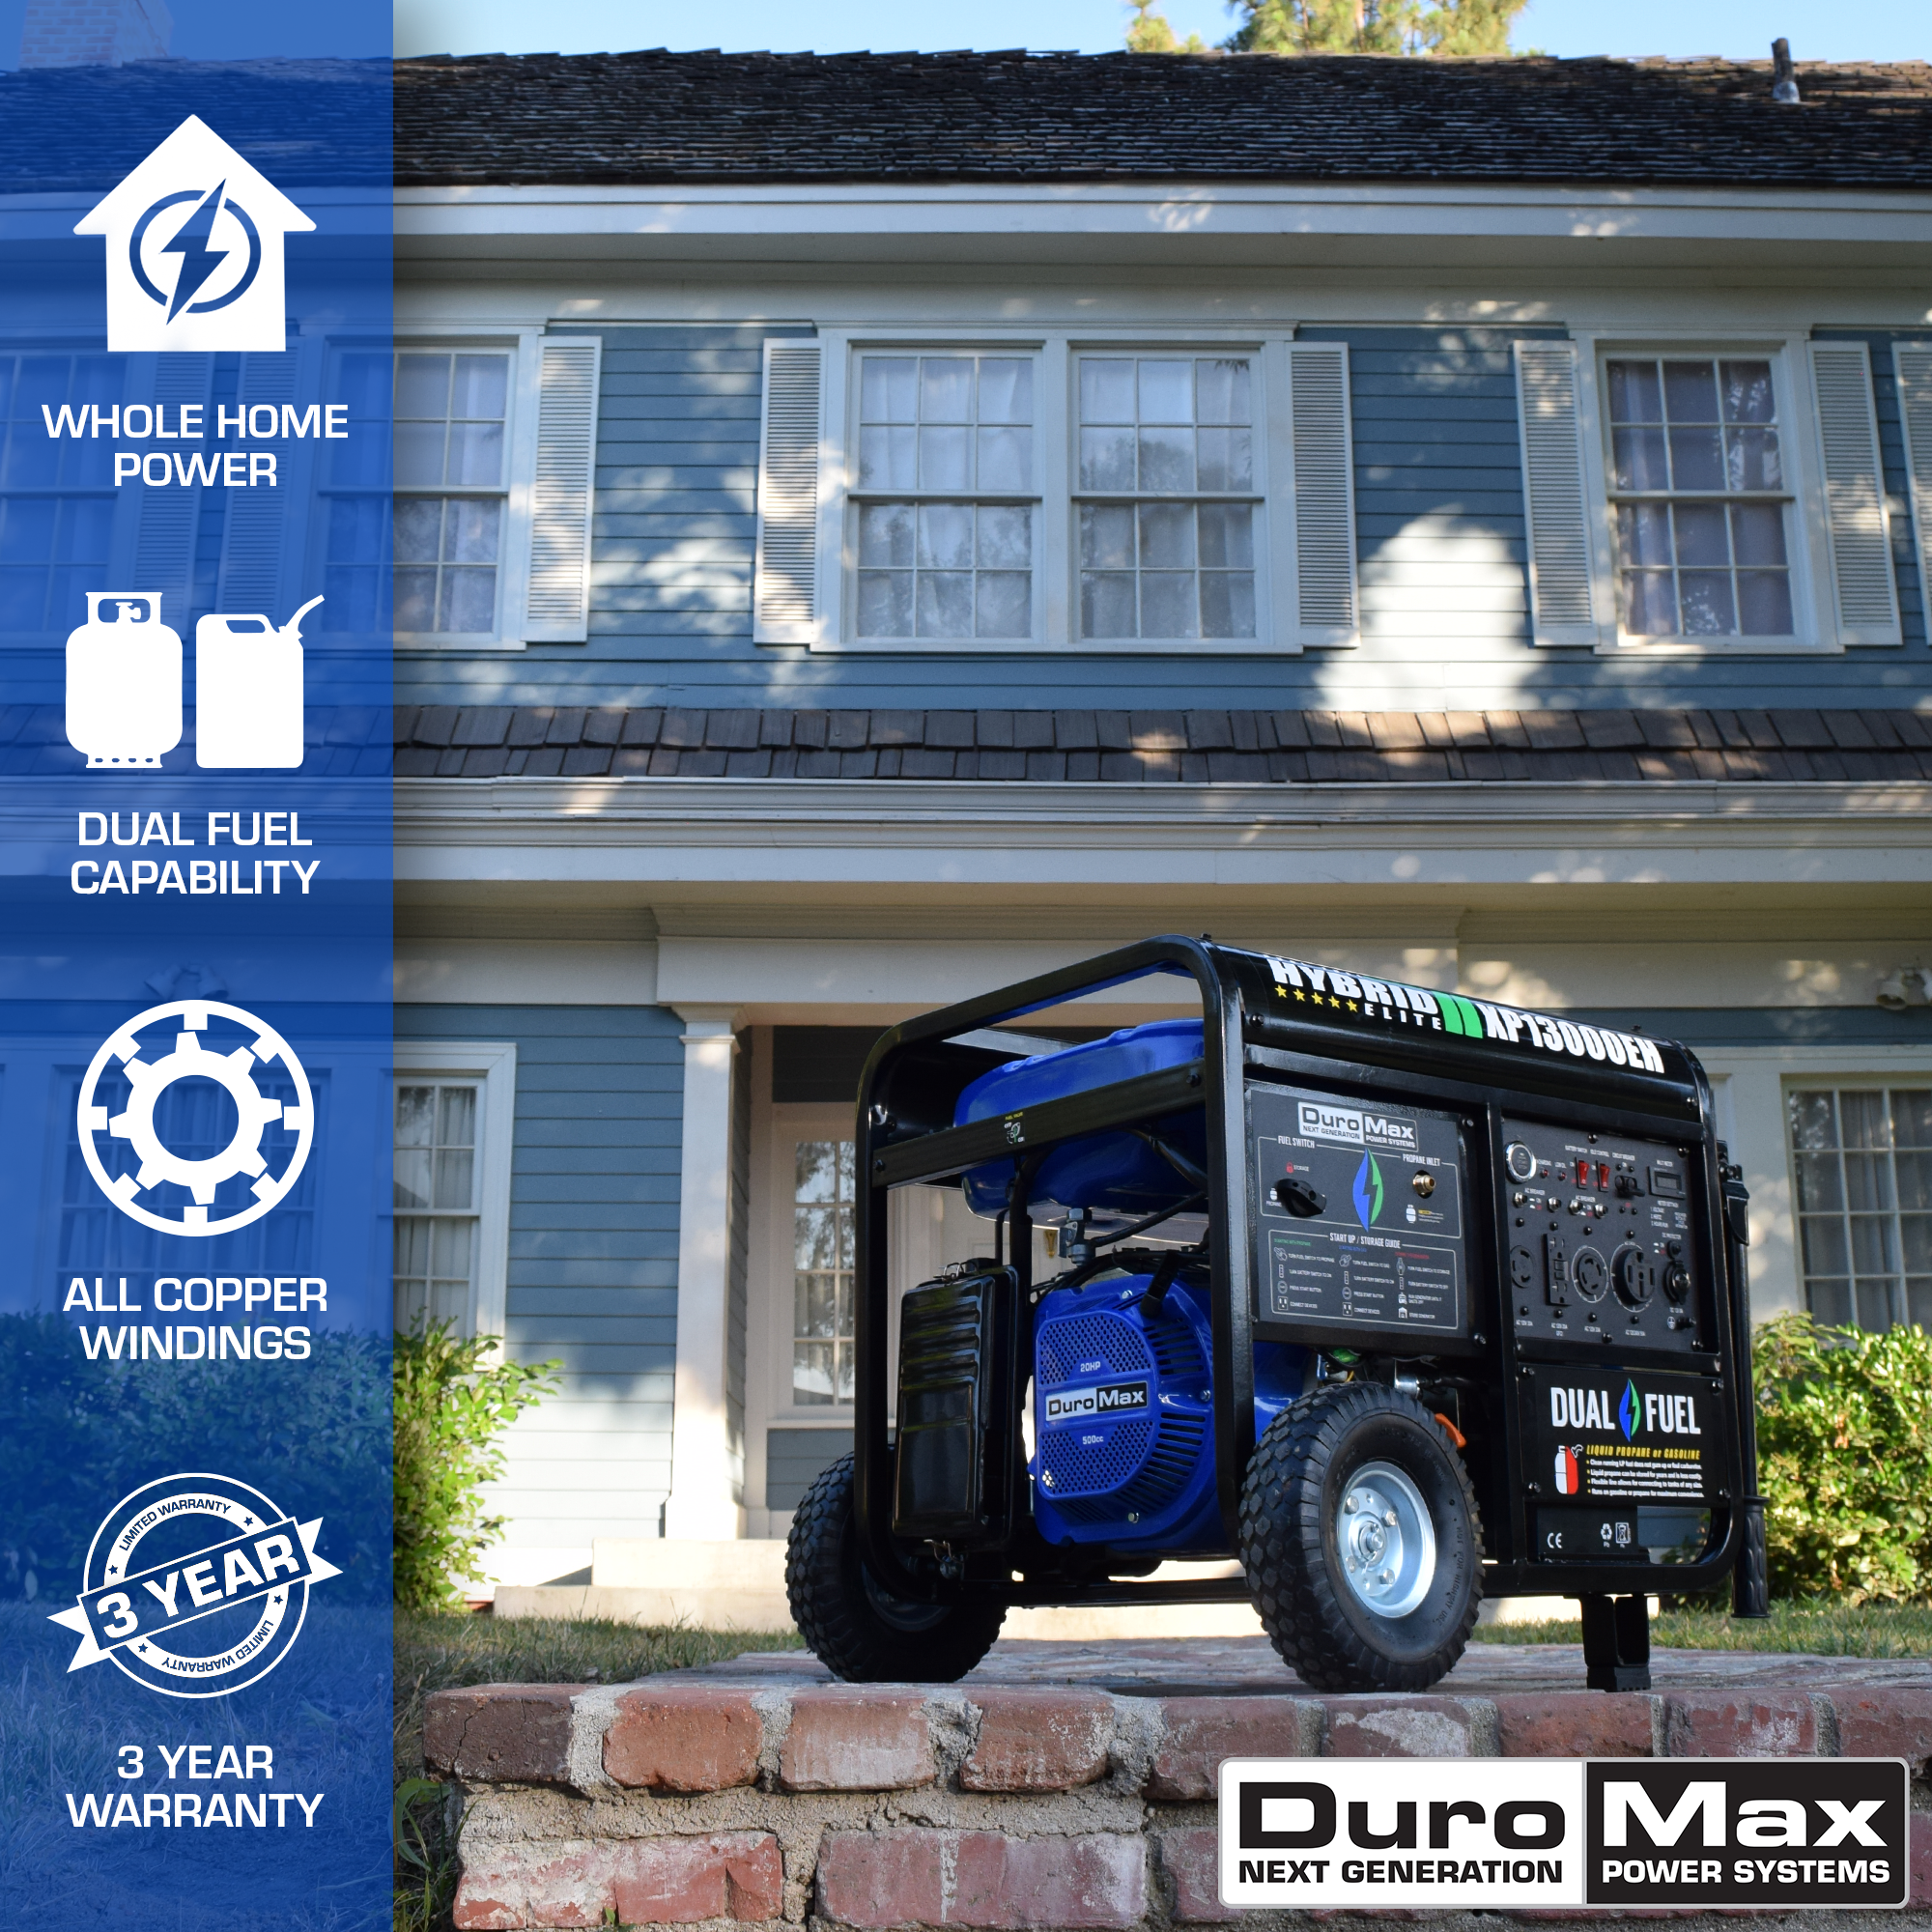 DuroMax, DuroMax XP13000EH 13,000 Watt Portable Dual Fuel Gas Propane Generator